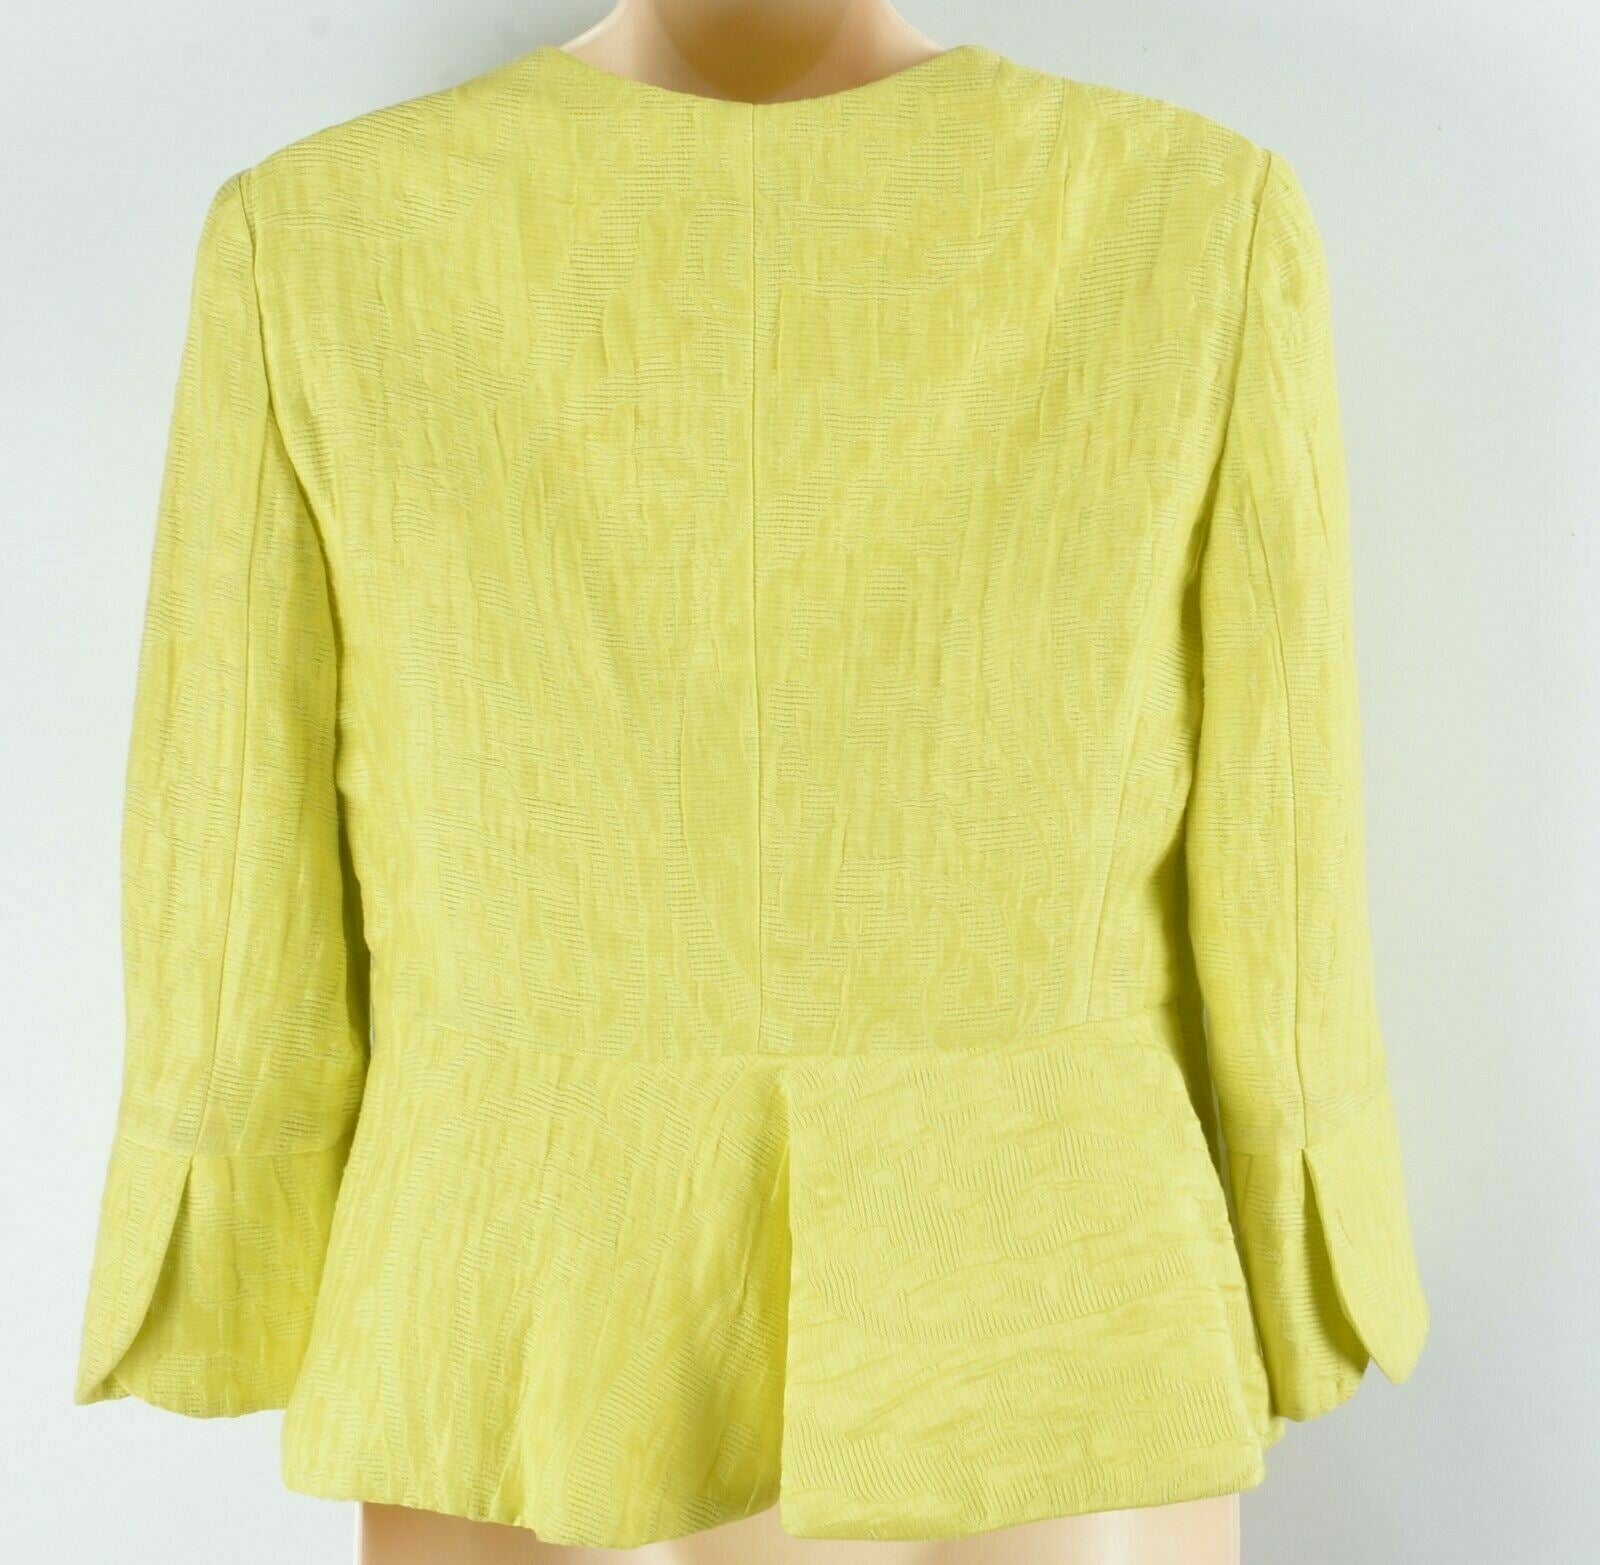 ARMANI COLLEZIONI Women's Yellow Textured Linen Blend Jacket, size UK 8